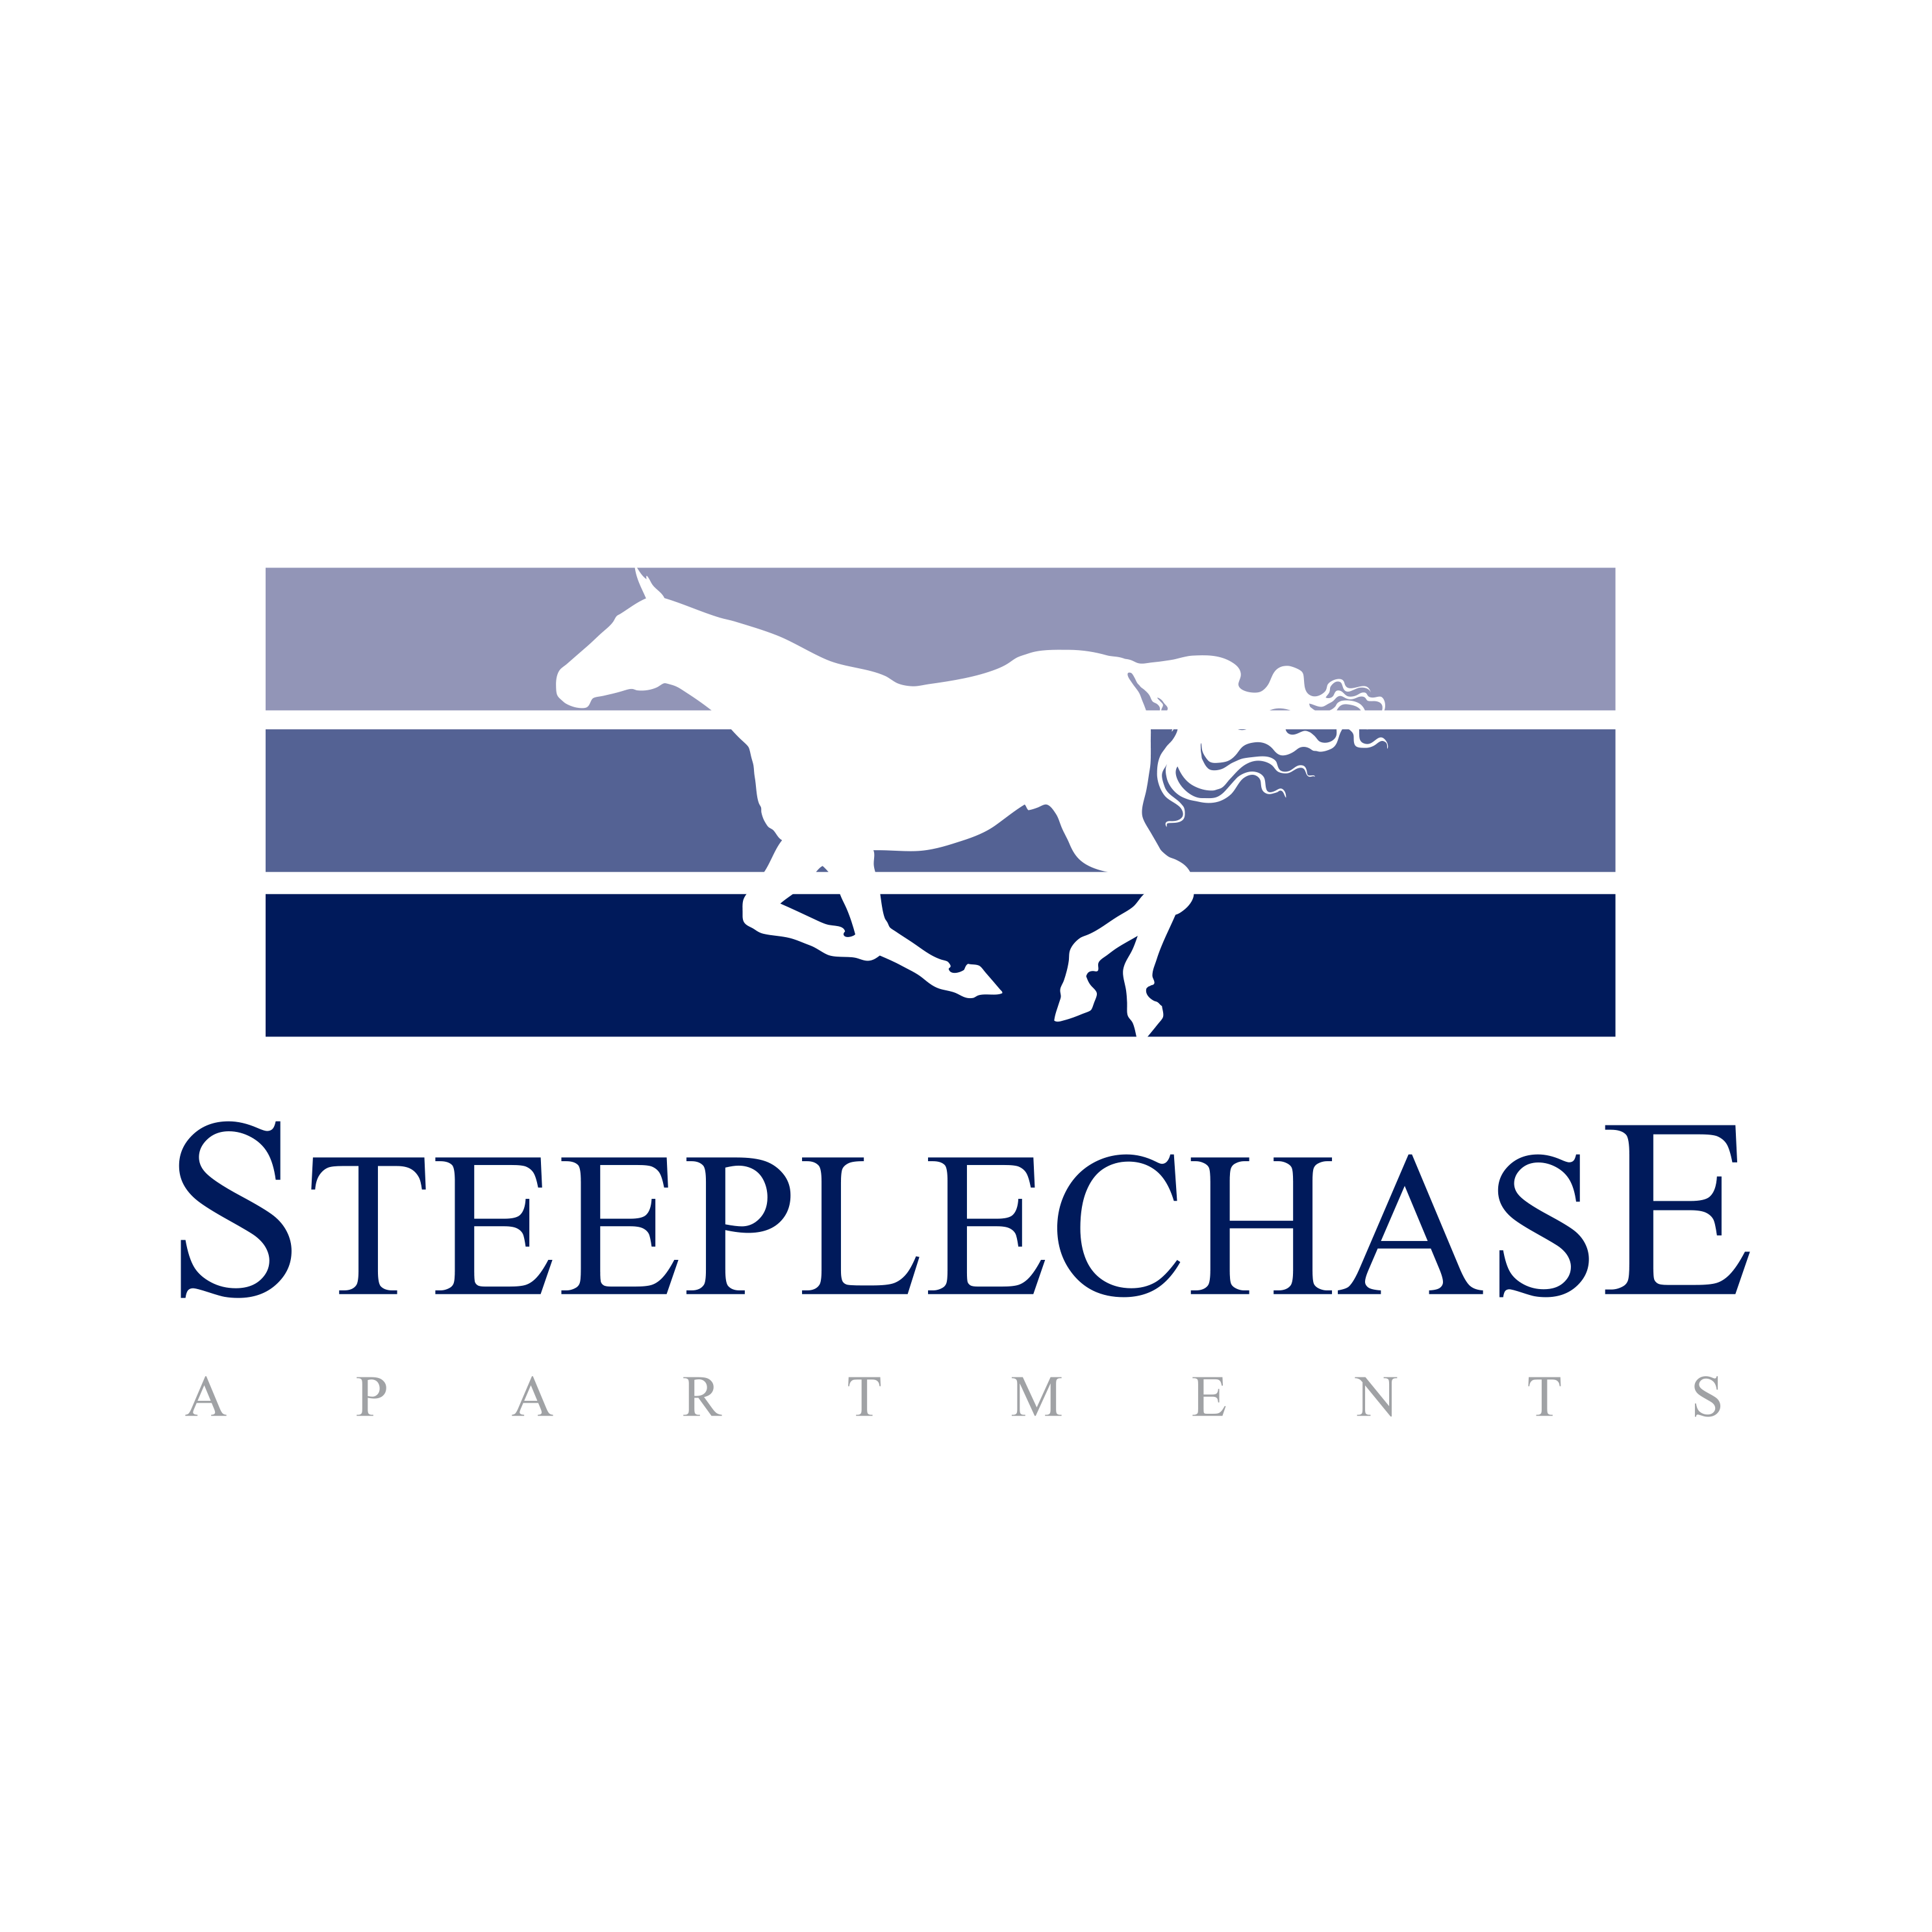 Steeplechase Apartments Logo